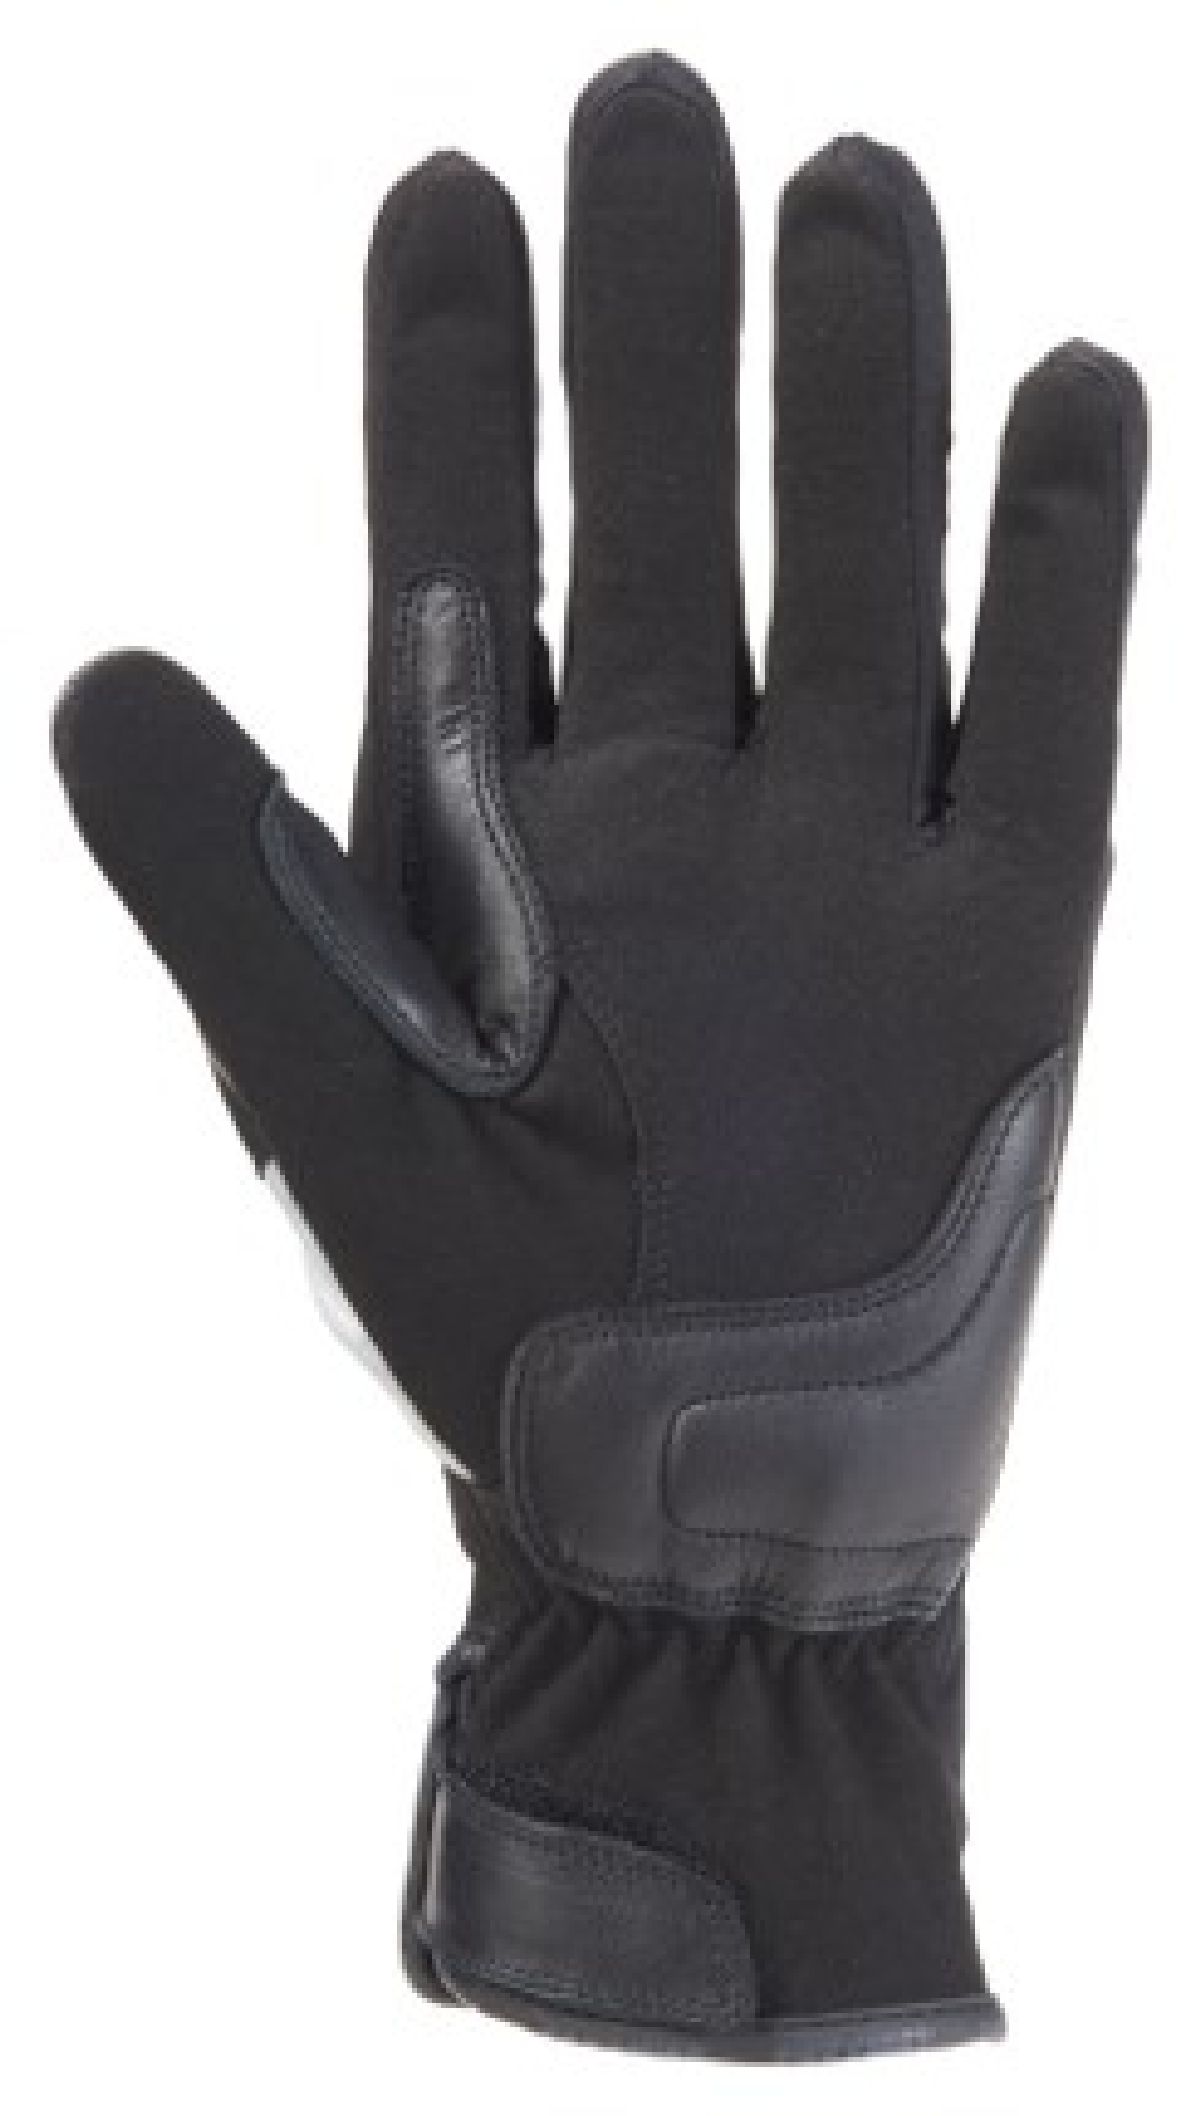 Easy II Handschuhe schwarz/grau L